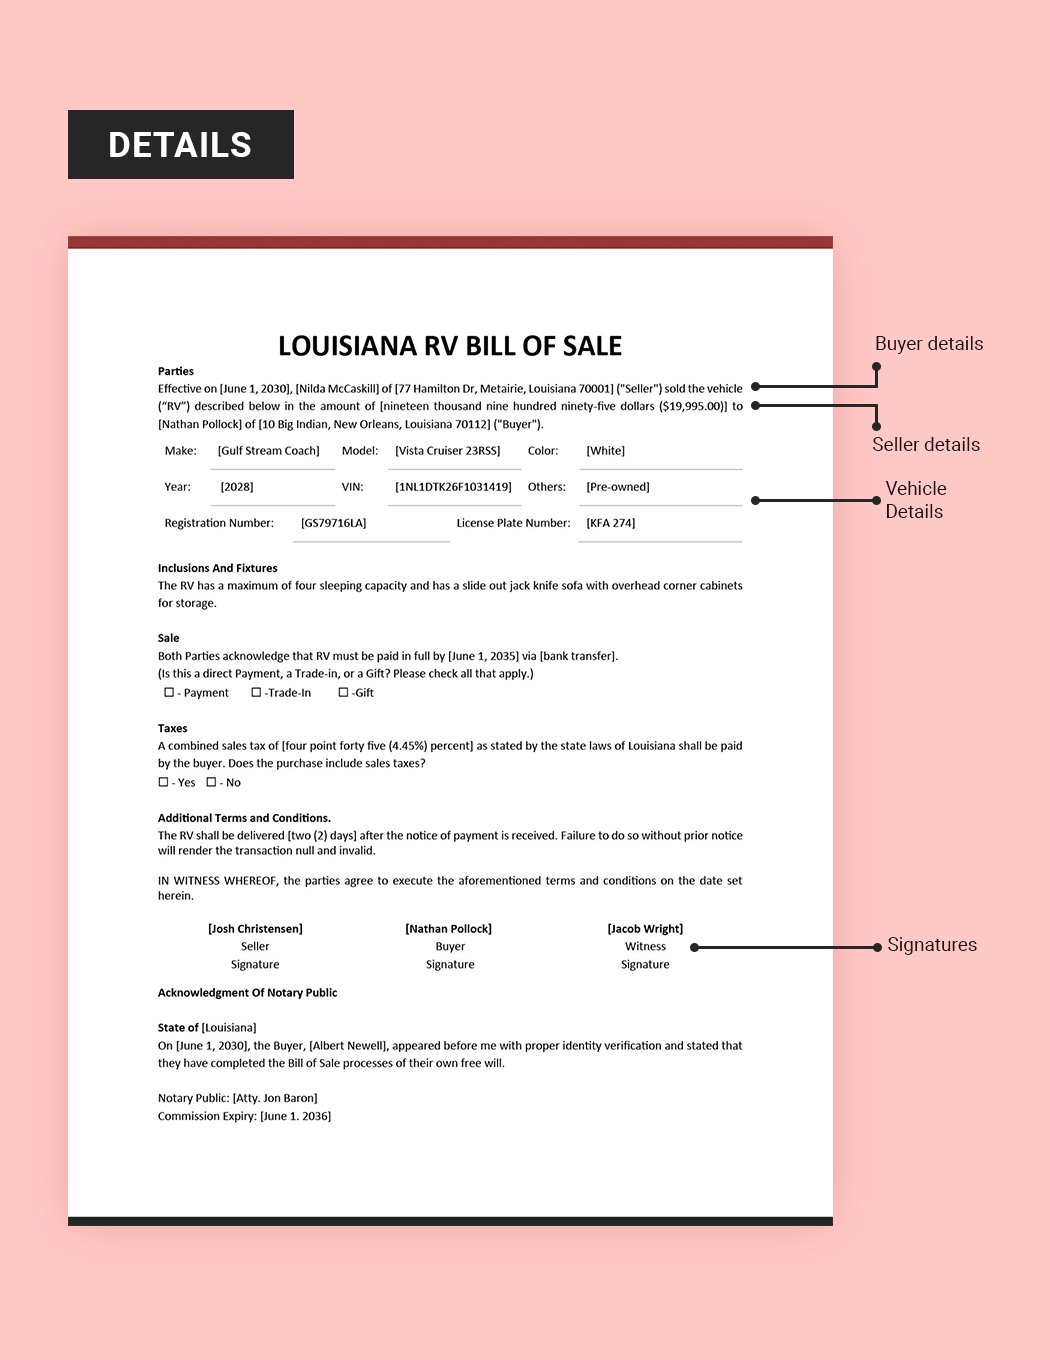 Louisiana RV Bill of Sale Form Template